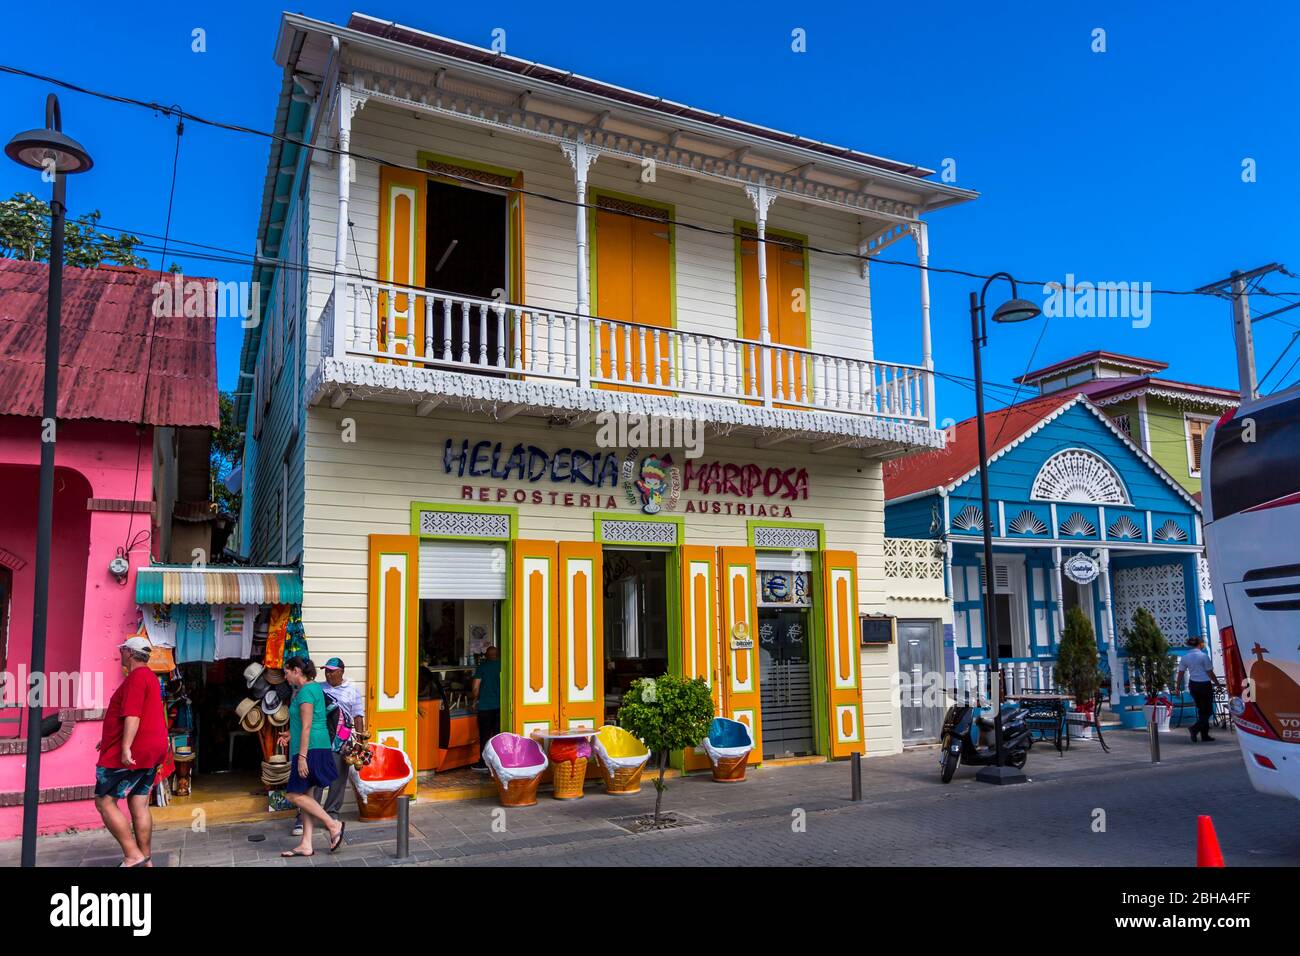 Eiscafé, Heladería Mariposa, Viktorianische Häuser, Zentrum, Puerto Plata, Dominikanische Republik, Große Antillen, Karibik, Atlantik, Mittelamerika Stock Photo